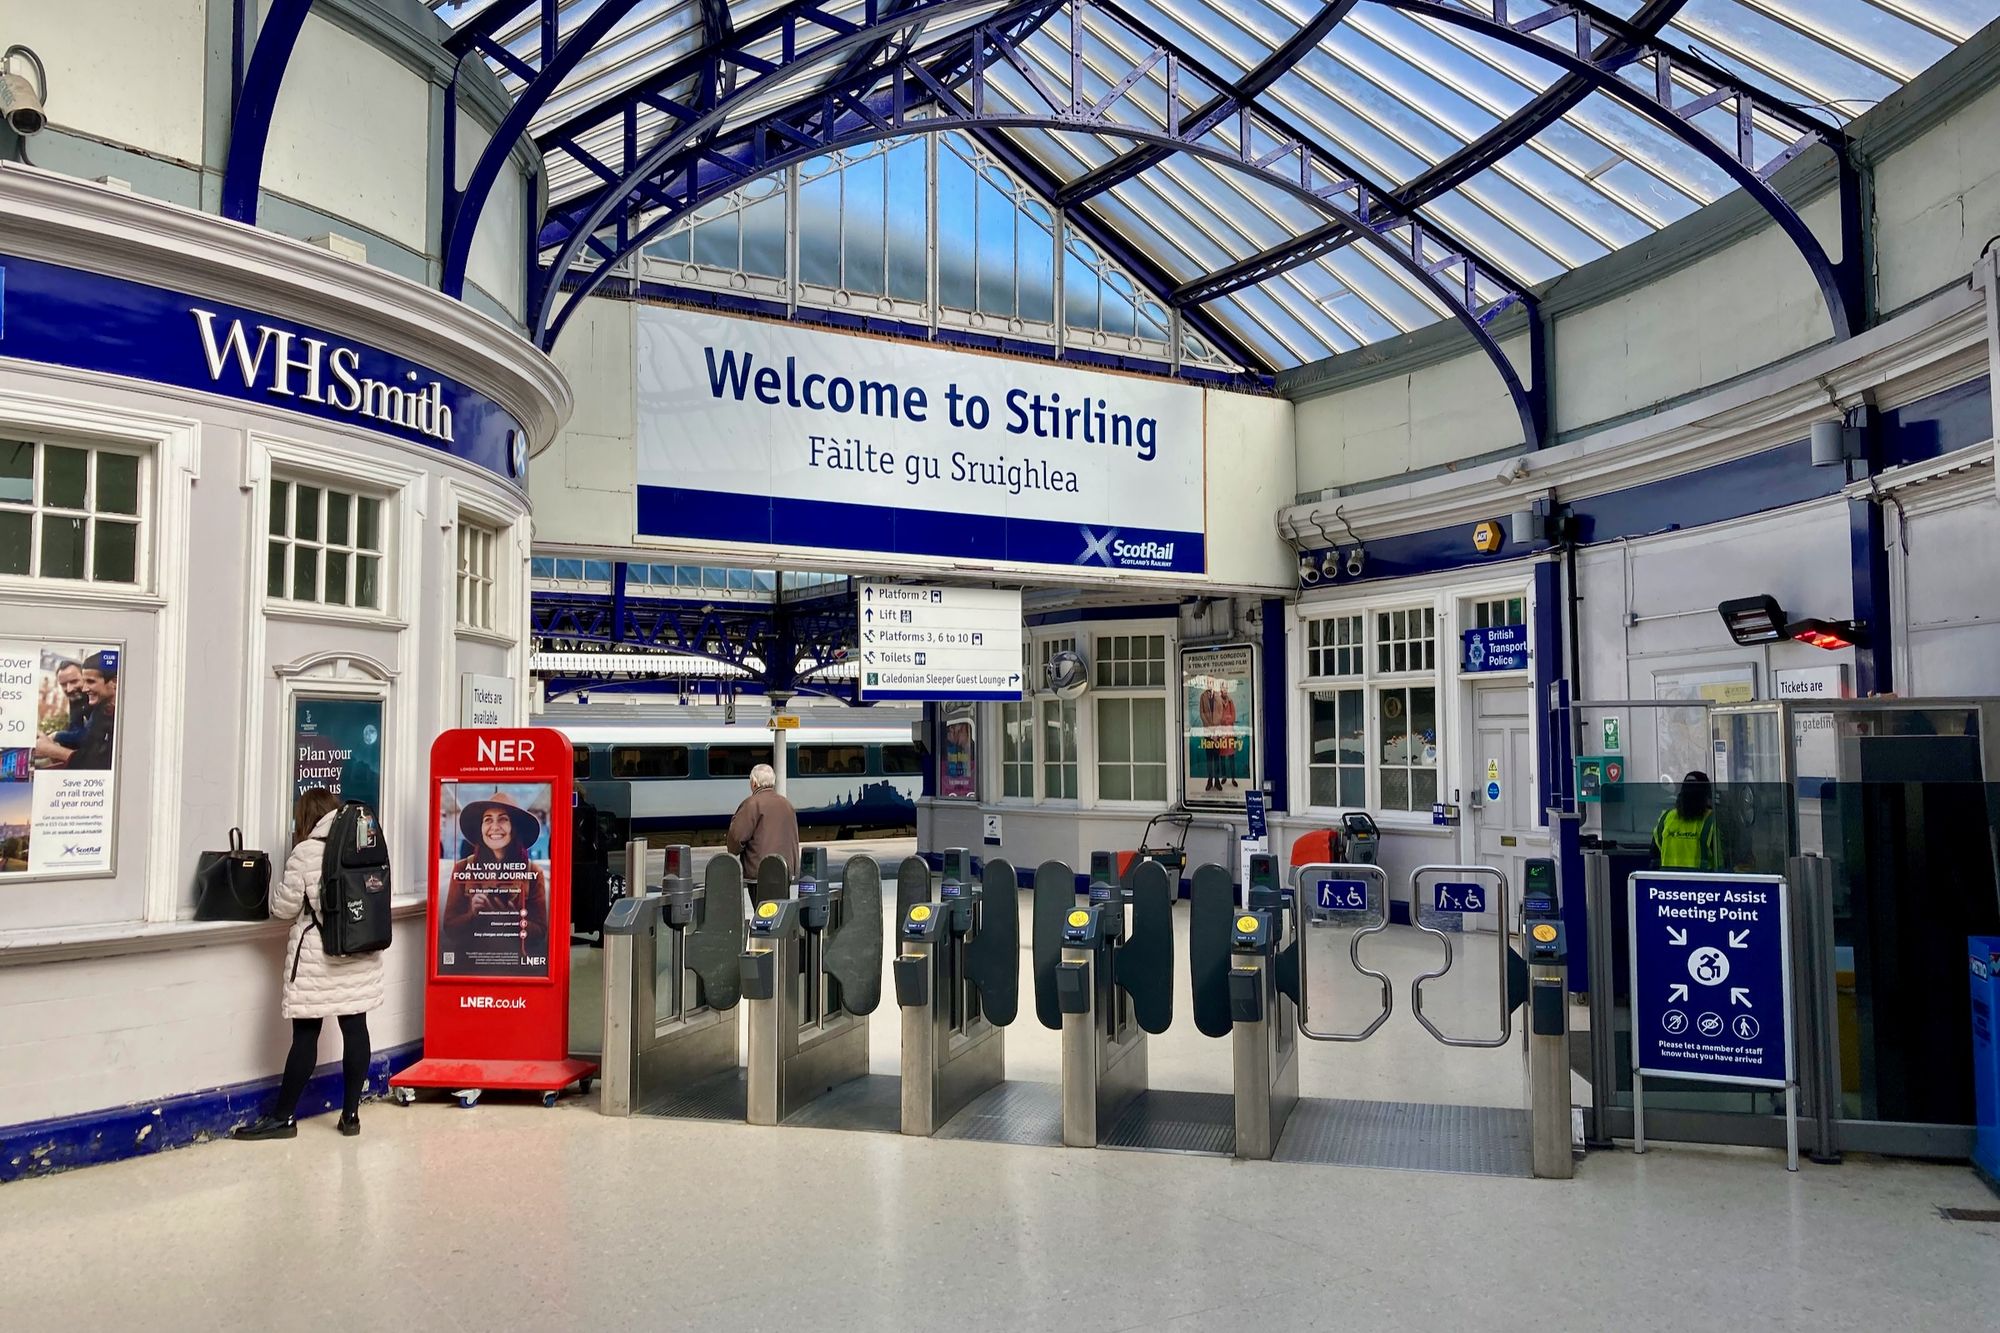 Bild: Bahnsteigsperren am Bahnhof Stirling